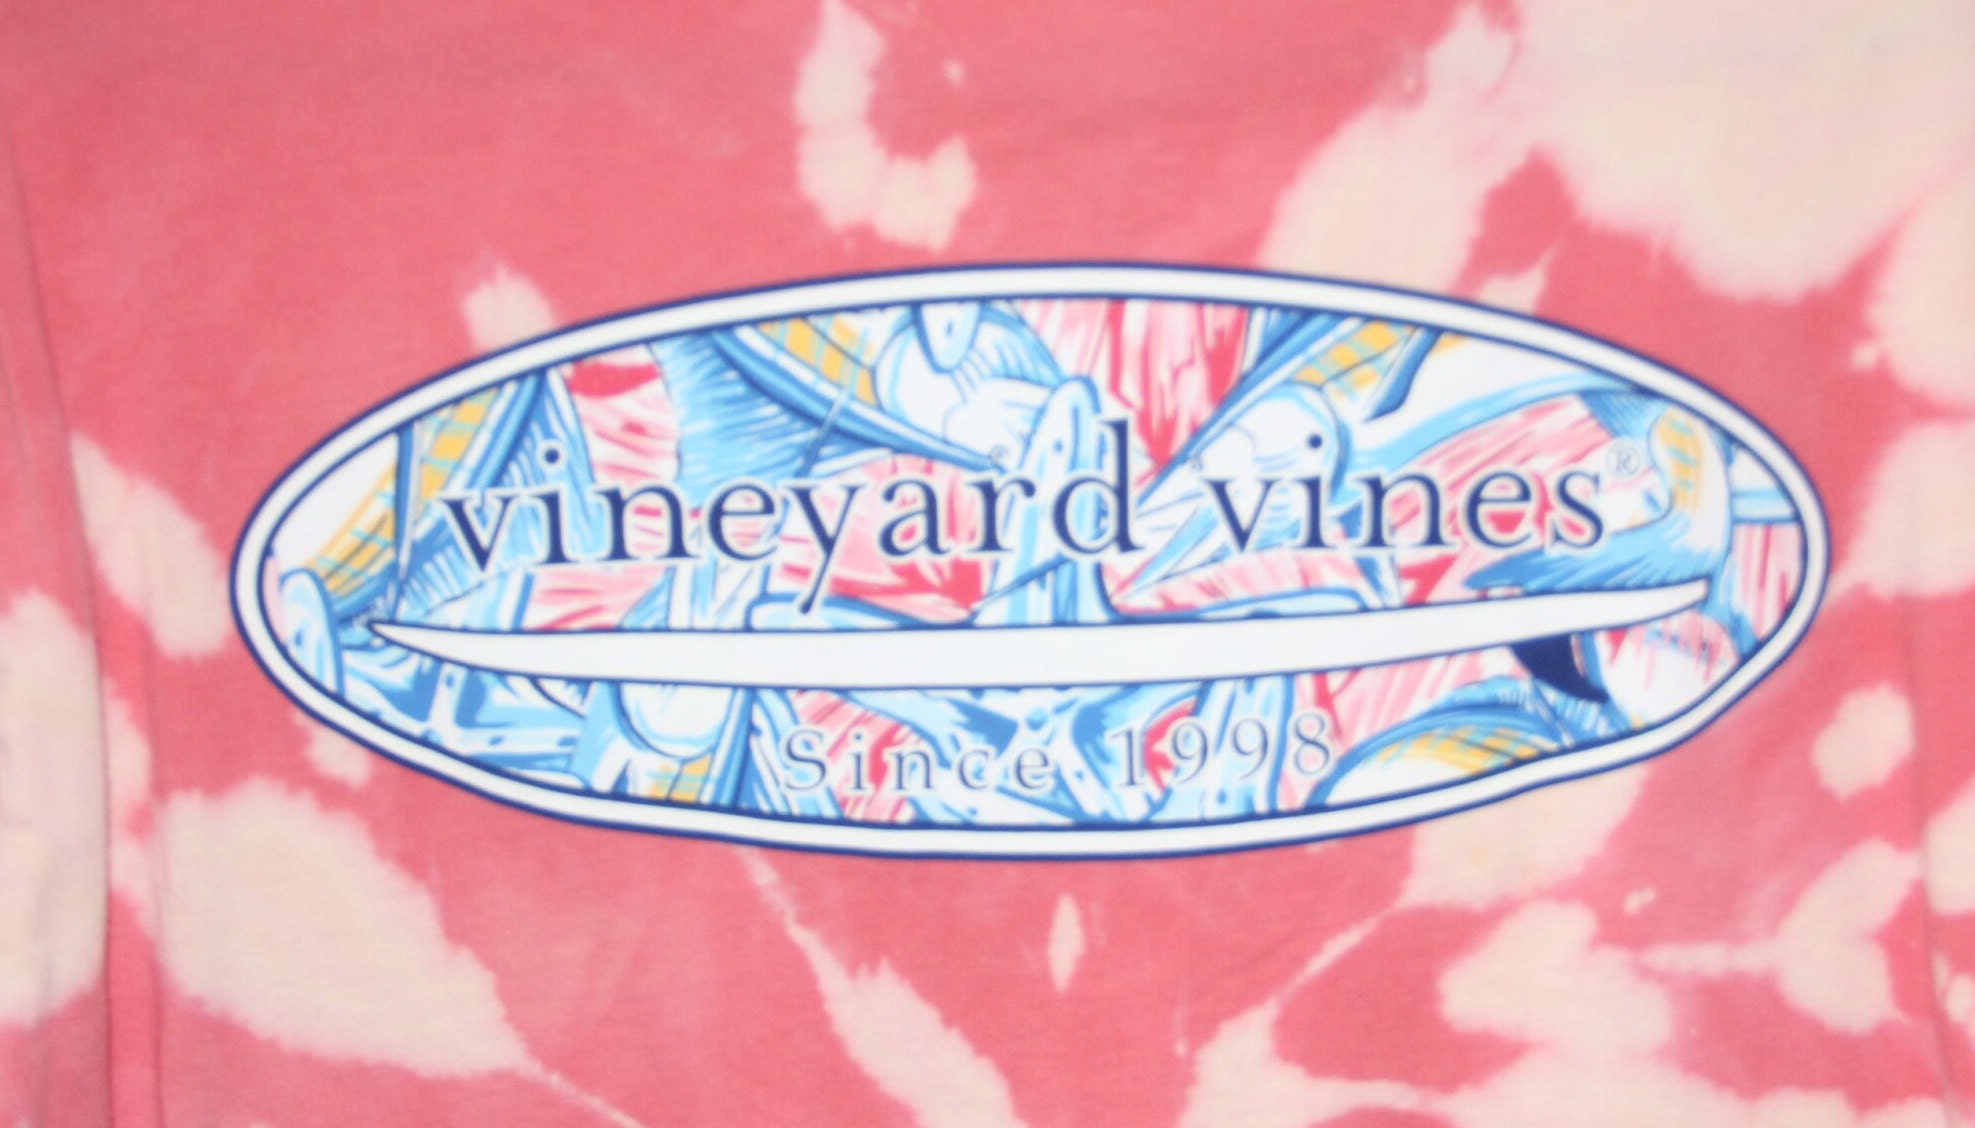 vineyard vines houston astros shirt